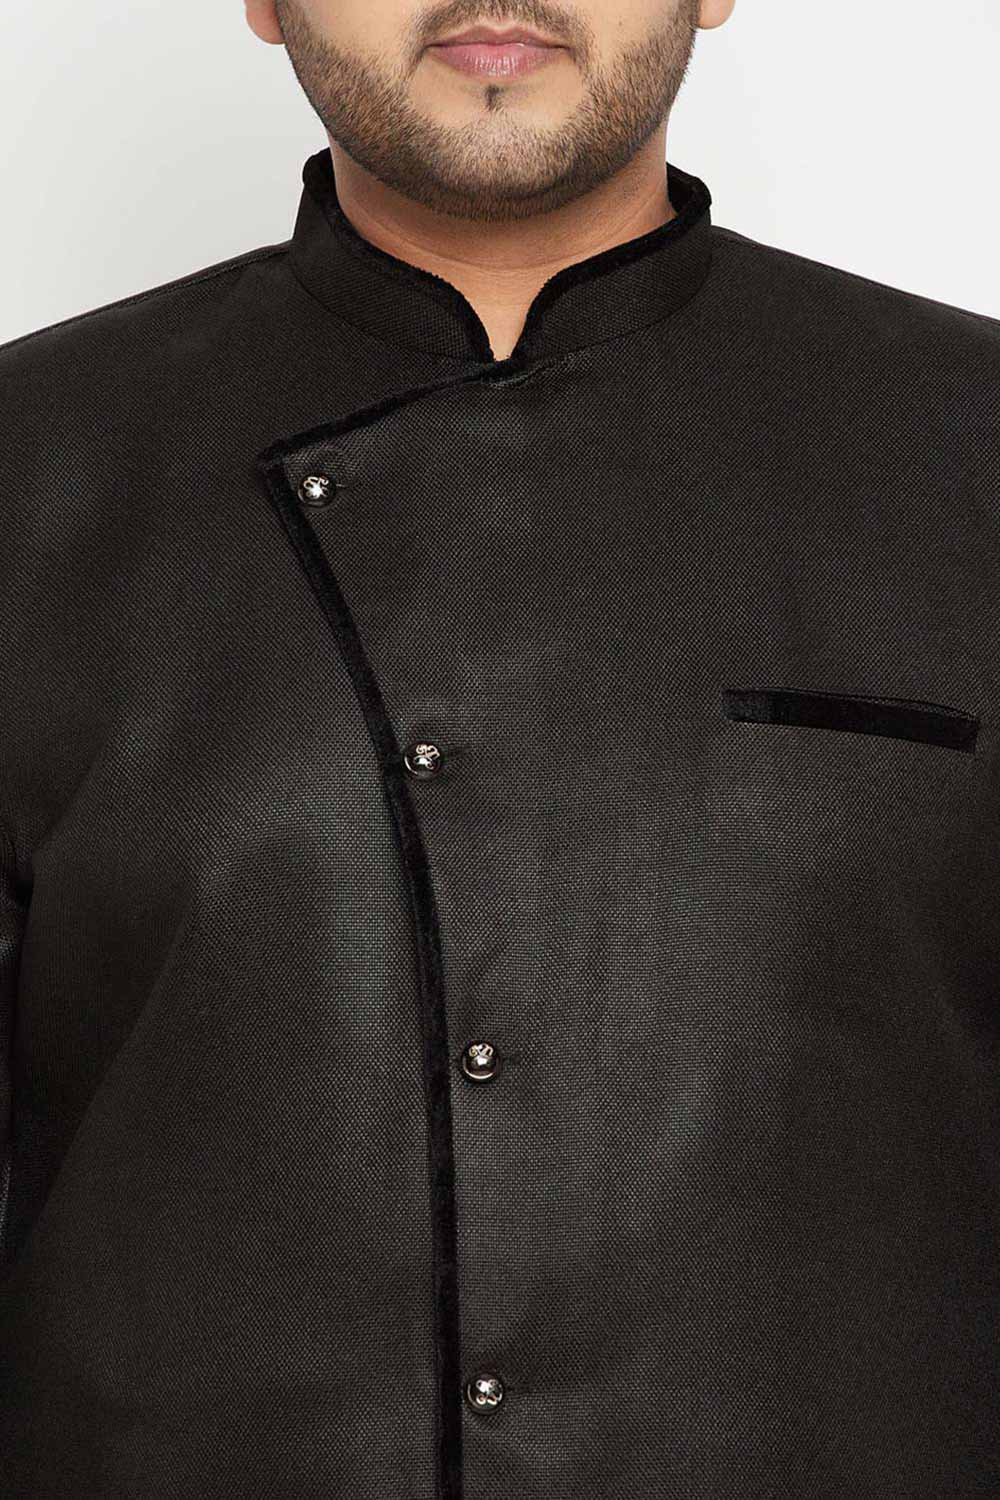 Buy Men's Silk Blend Solid Sherwani Top in Black - Zoom in